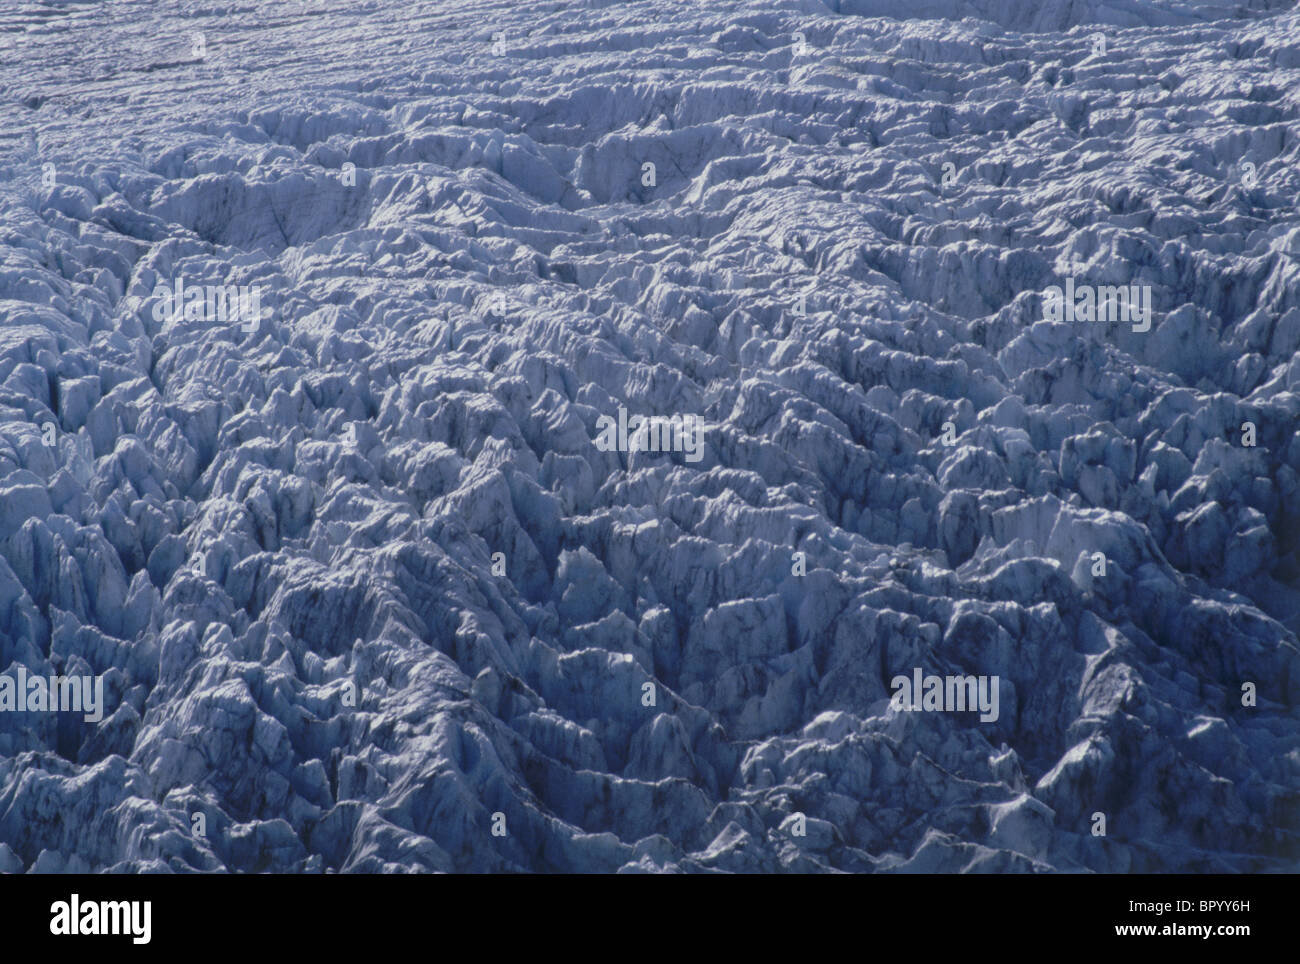 Aerial photograph of a glacier in Alaska Stock Photo